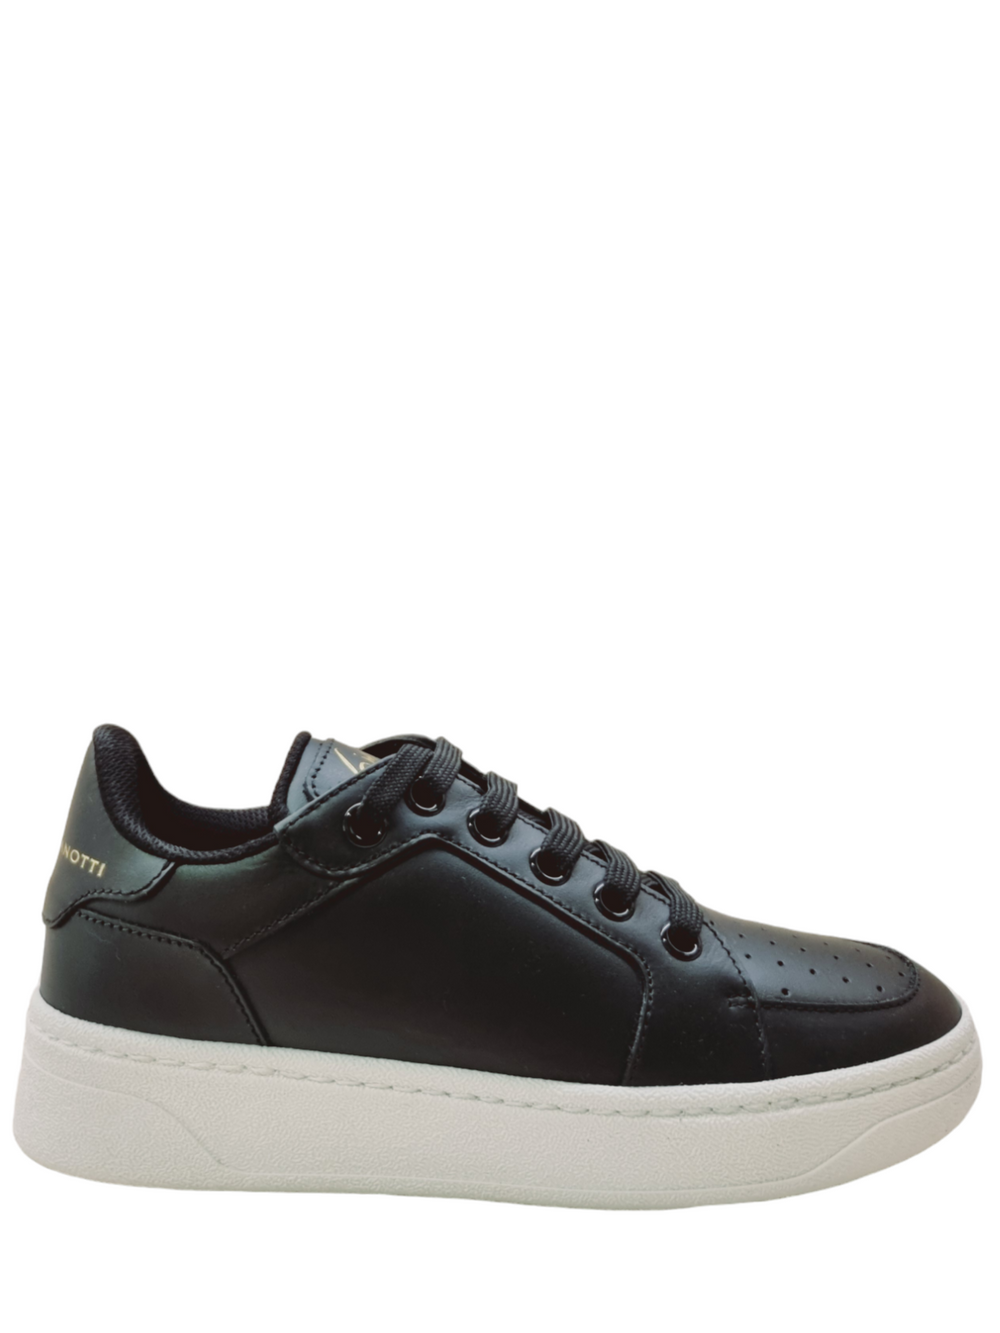 Gz94 Black Leather Sneakers - GIUSEPPE-ZANOTTI - Liberty Shoes Australia